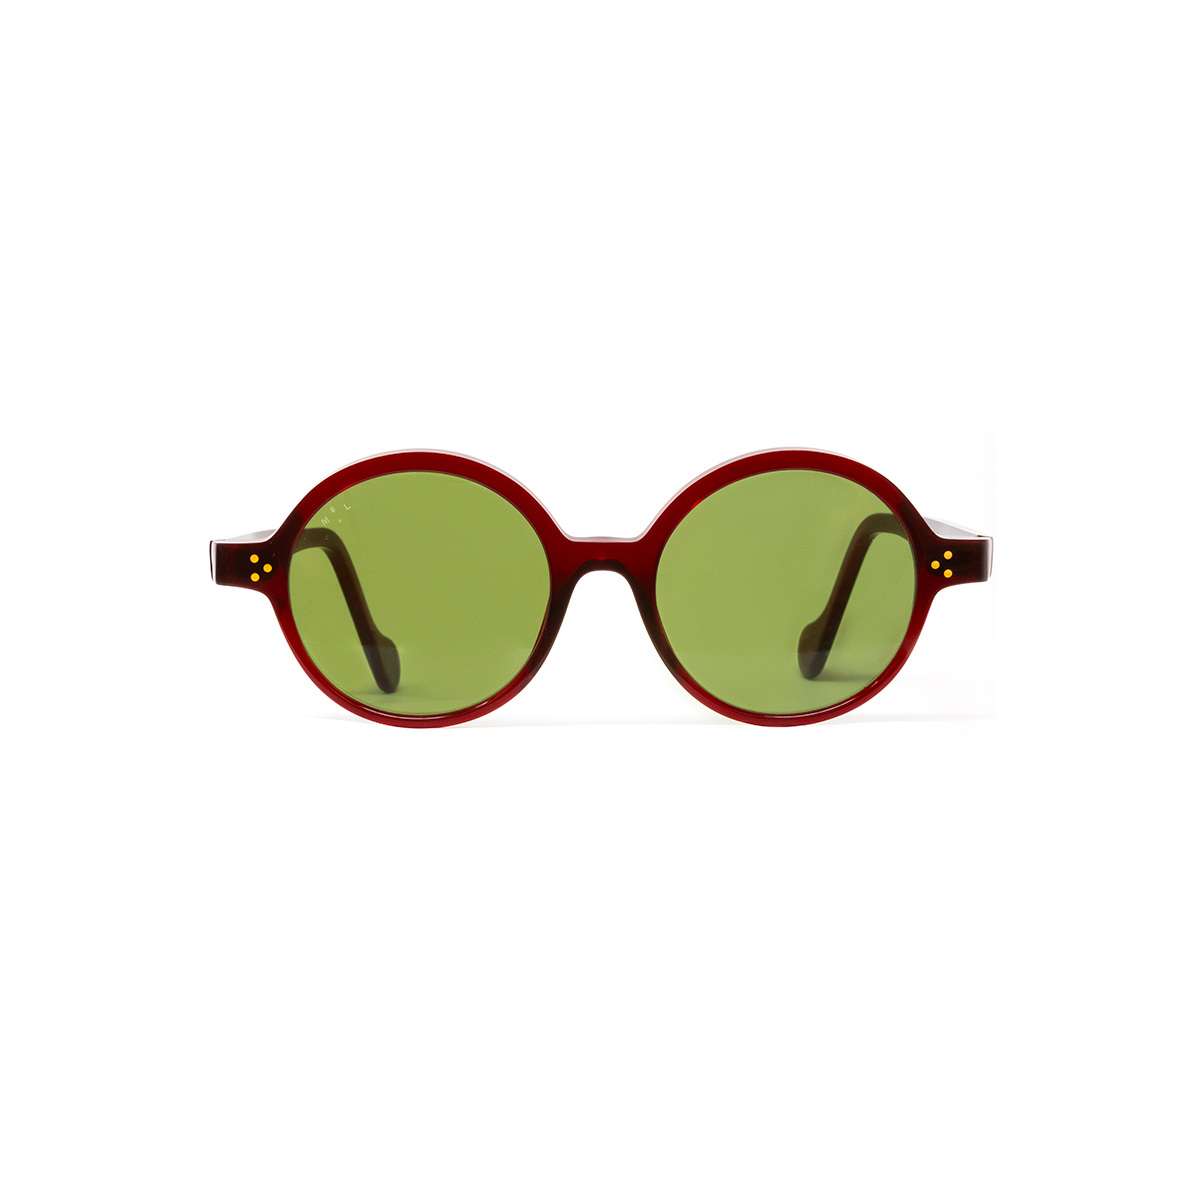 Sunglasses Patti, Bordeaux - Size 50-18 - Organic acetate - image 1